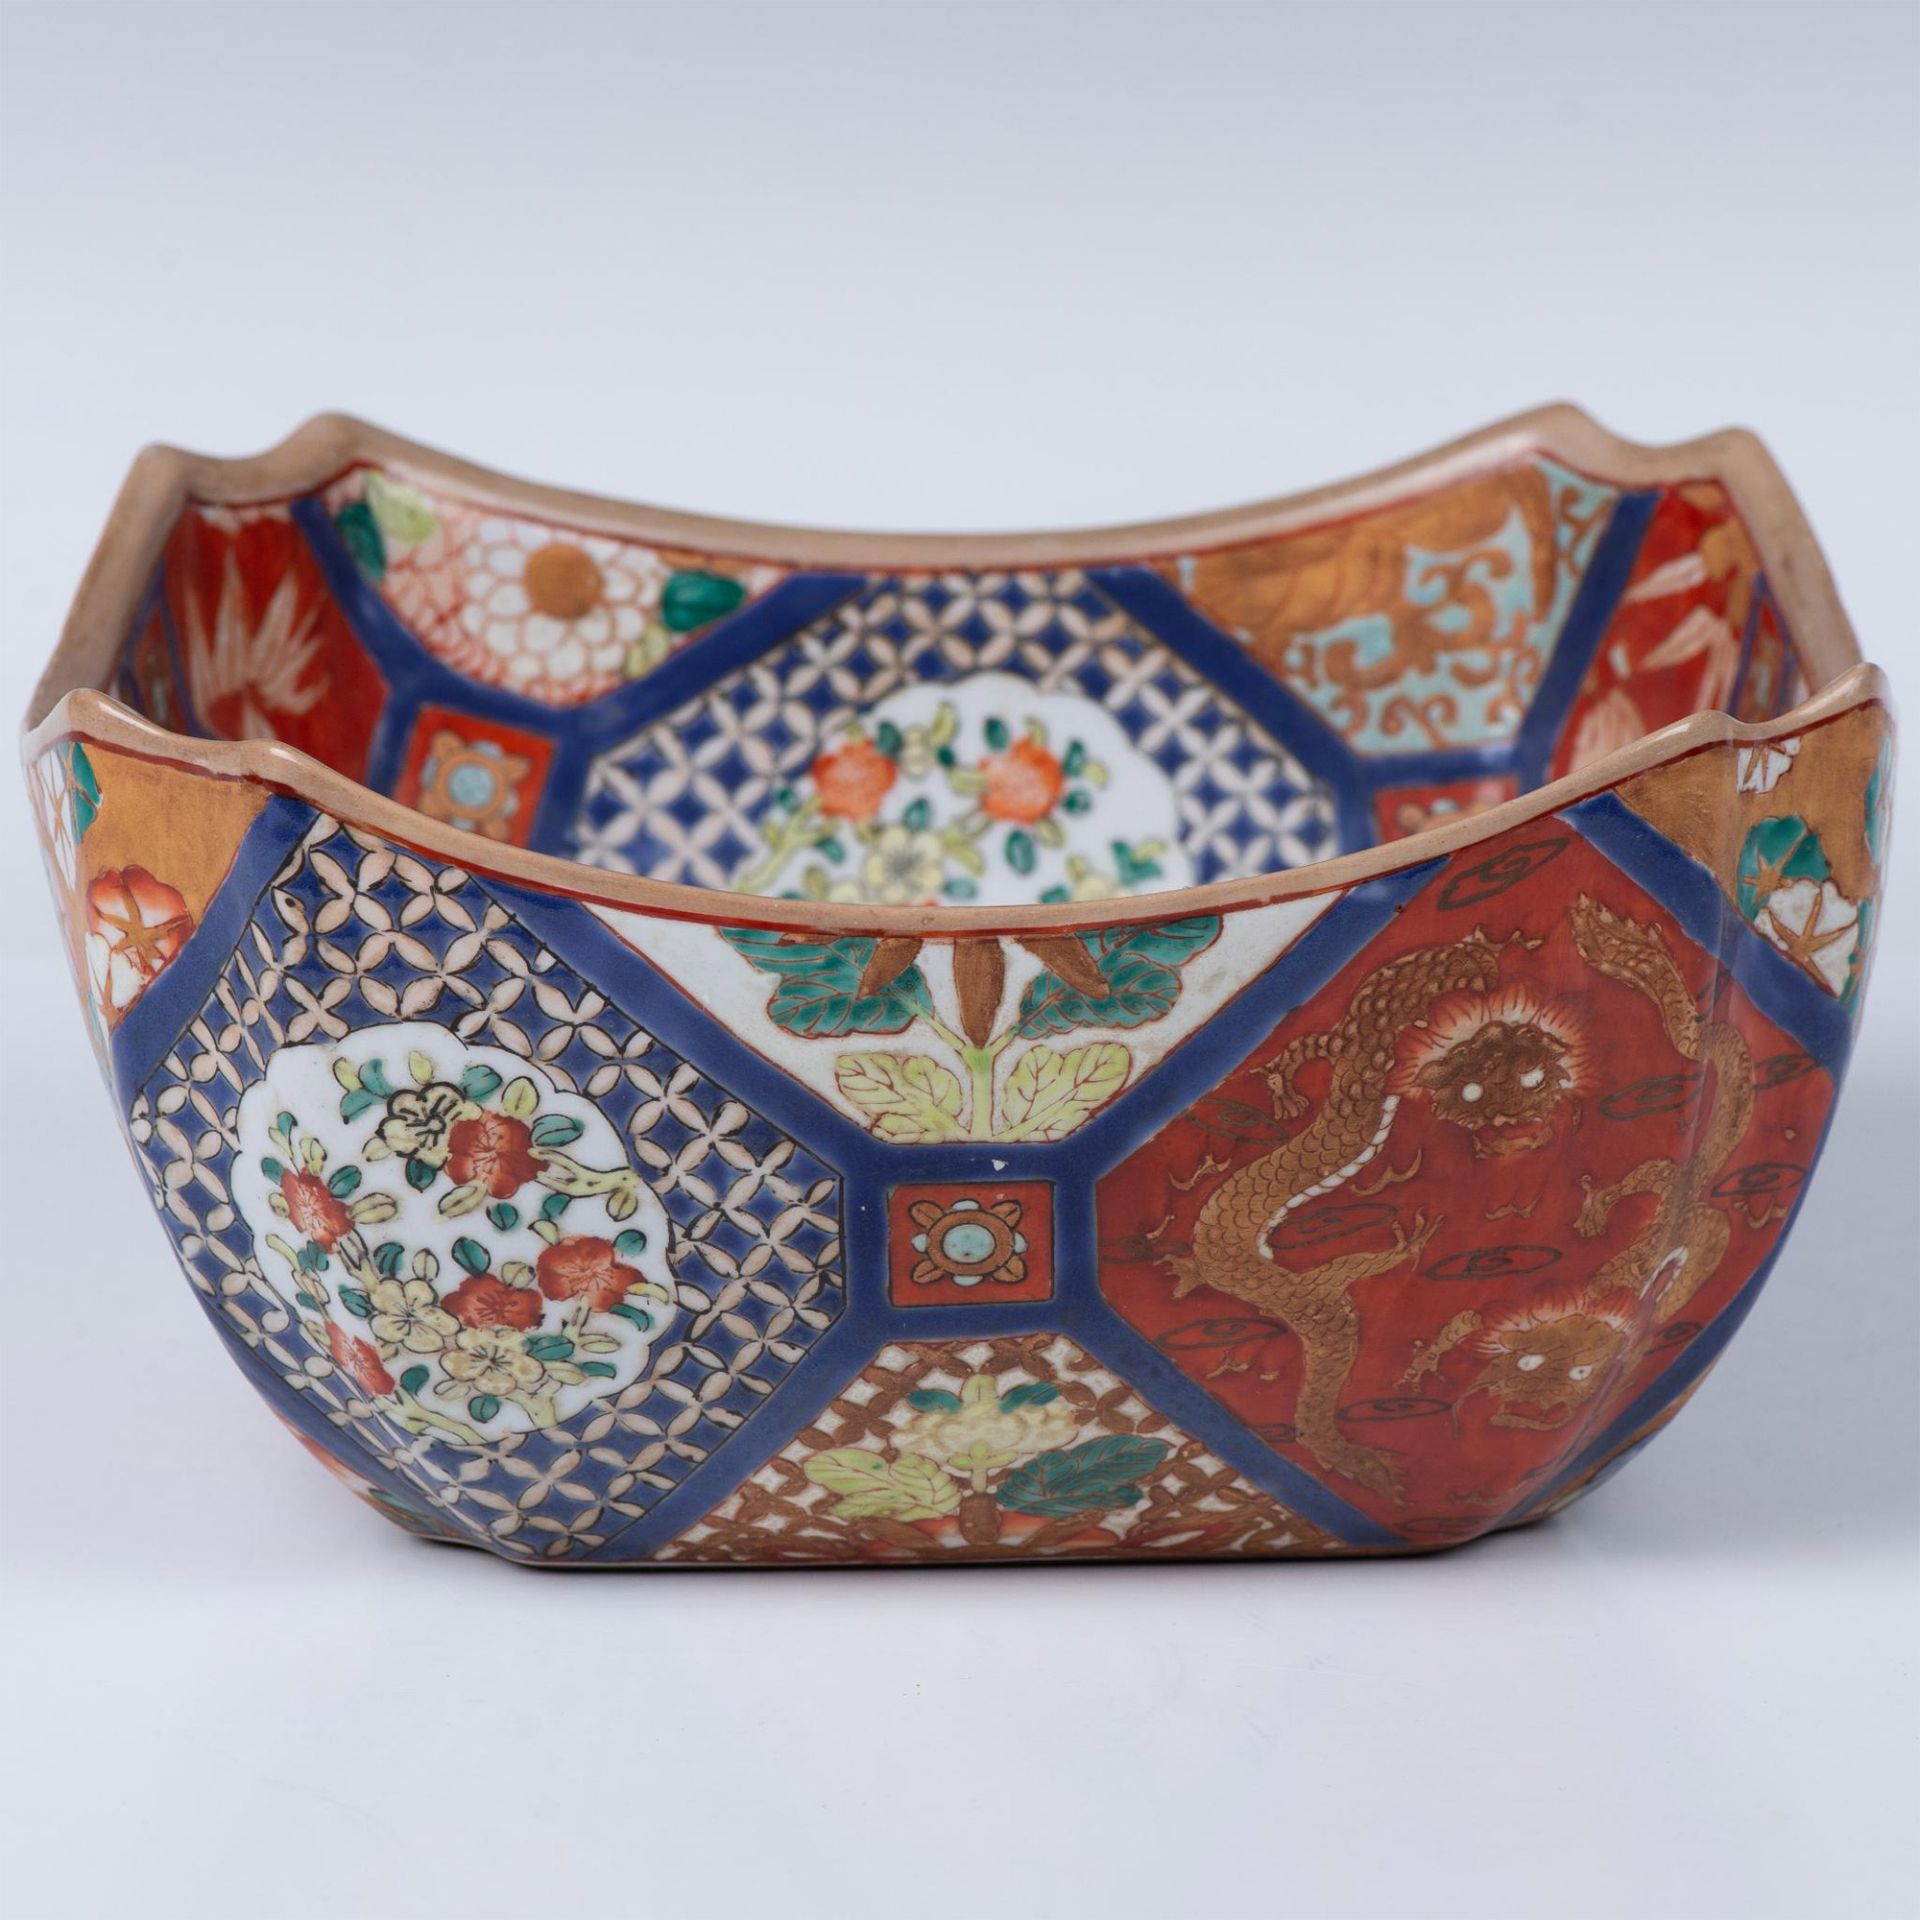 Chinese Ceramic Bowl, Foo Dogs, Cranes, Blue Bird - Image 2 of 4